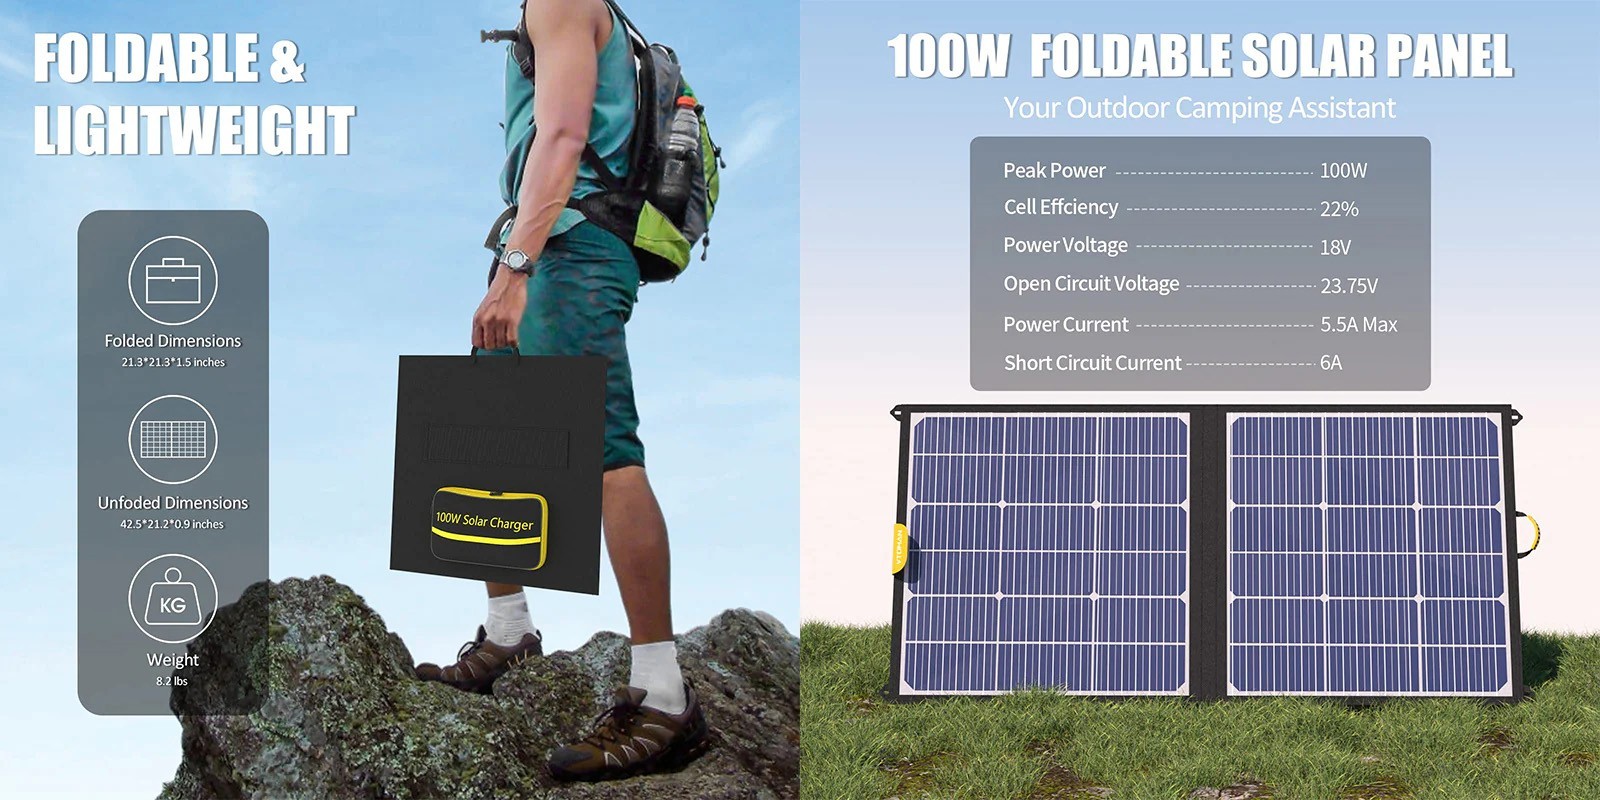 VTOMAN 100W Foldable Solar Panel, 22% Conversion Efficiency, IP65 Waterproof, Adjustable Kickstands